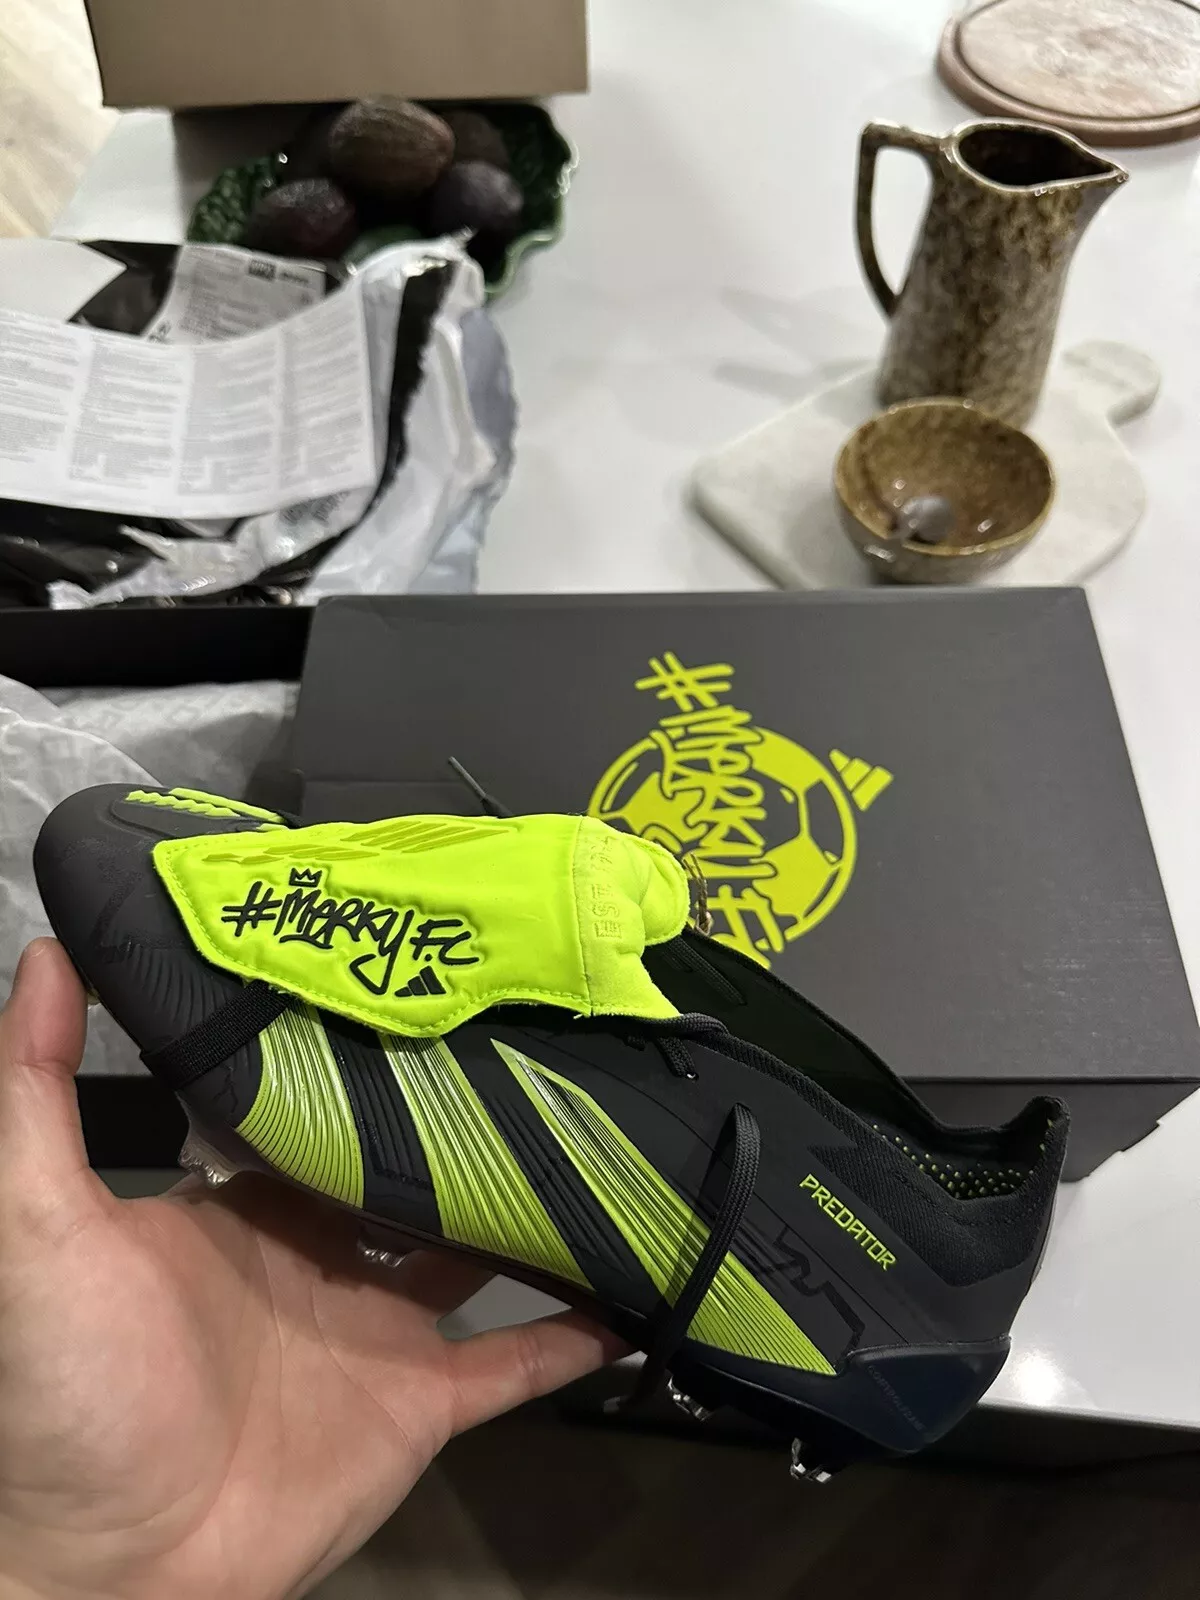 Adidas Predator Merky FC Boots Revealed